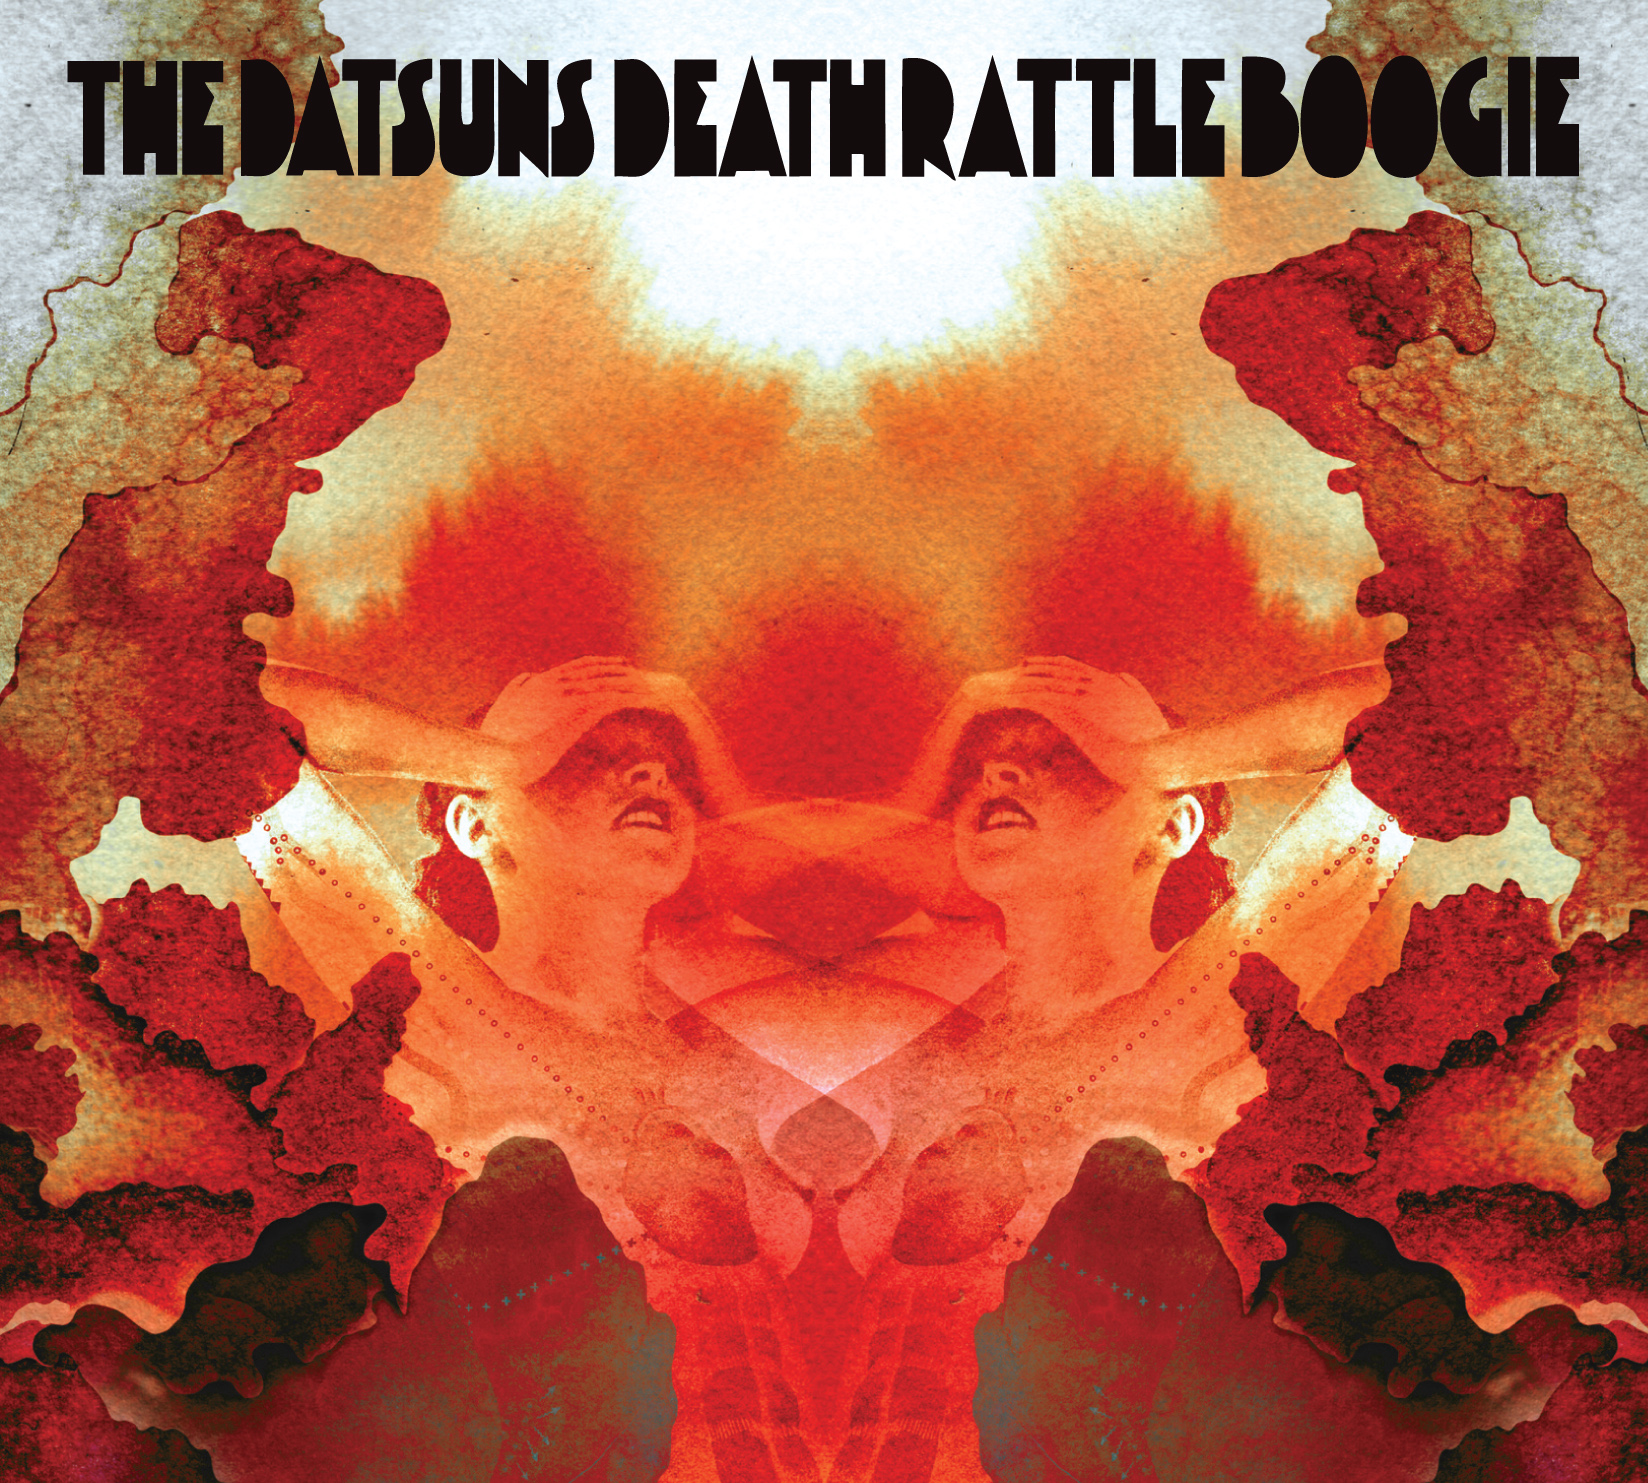 Bummer Album of the Week: The Datsuns - Death Rattle Boogie